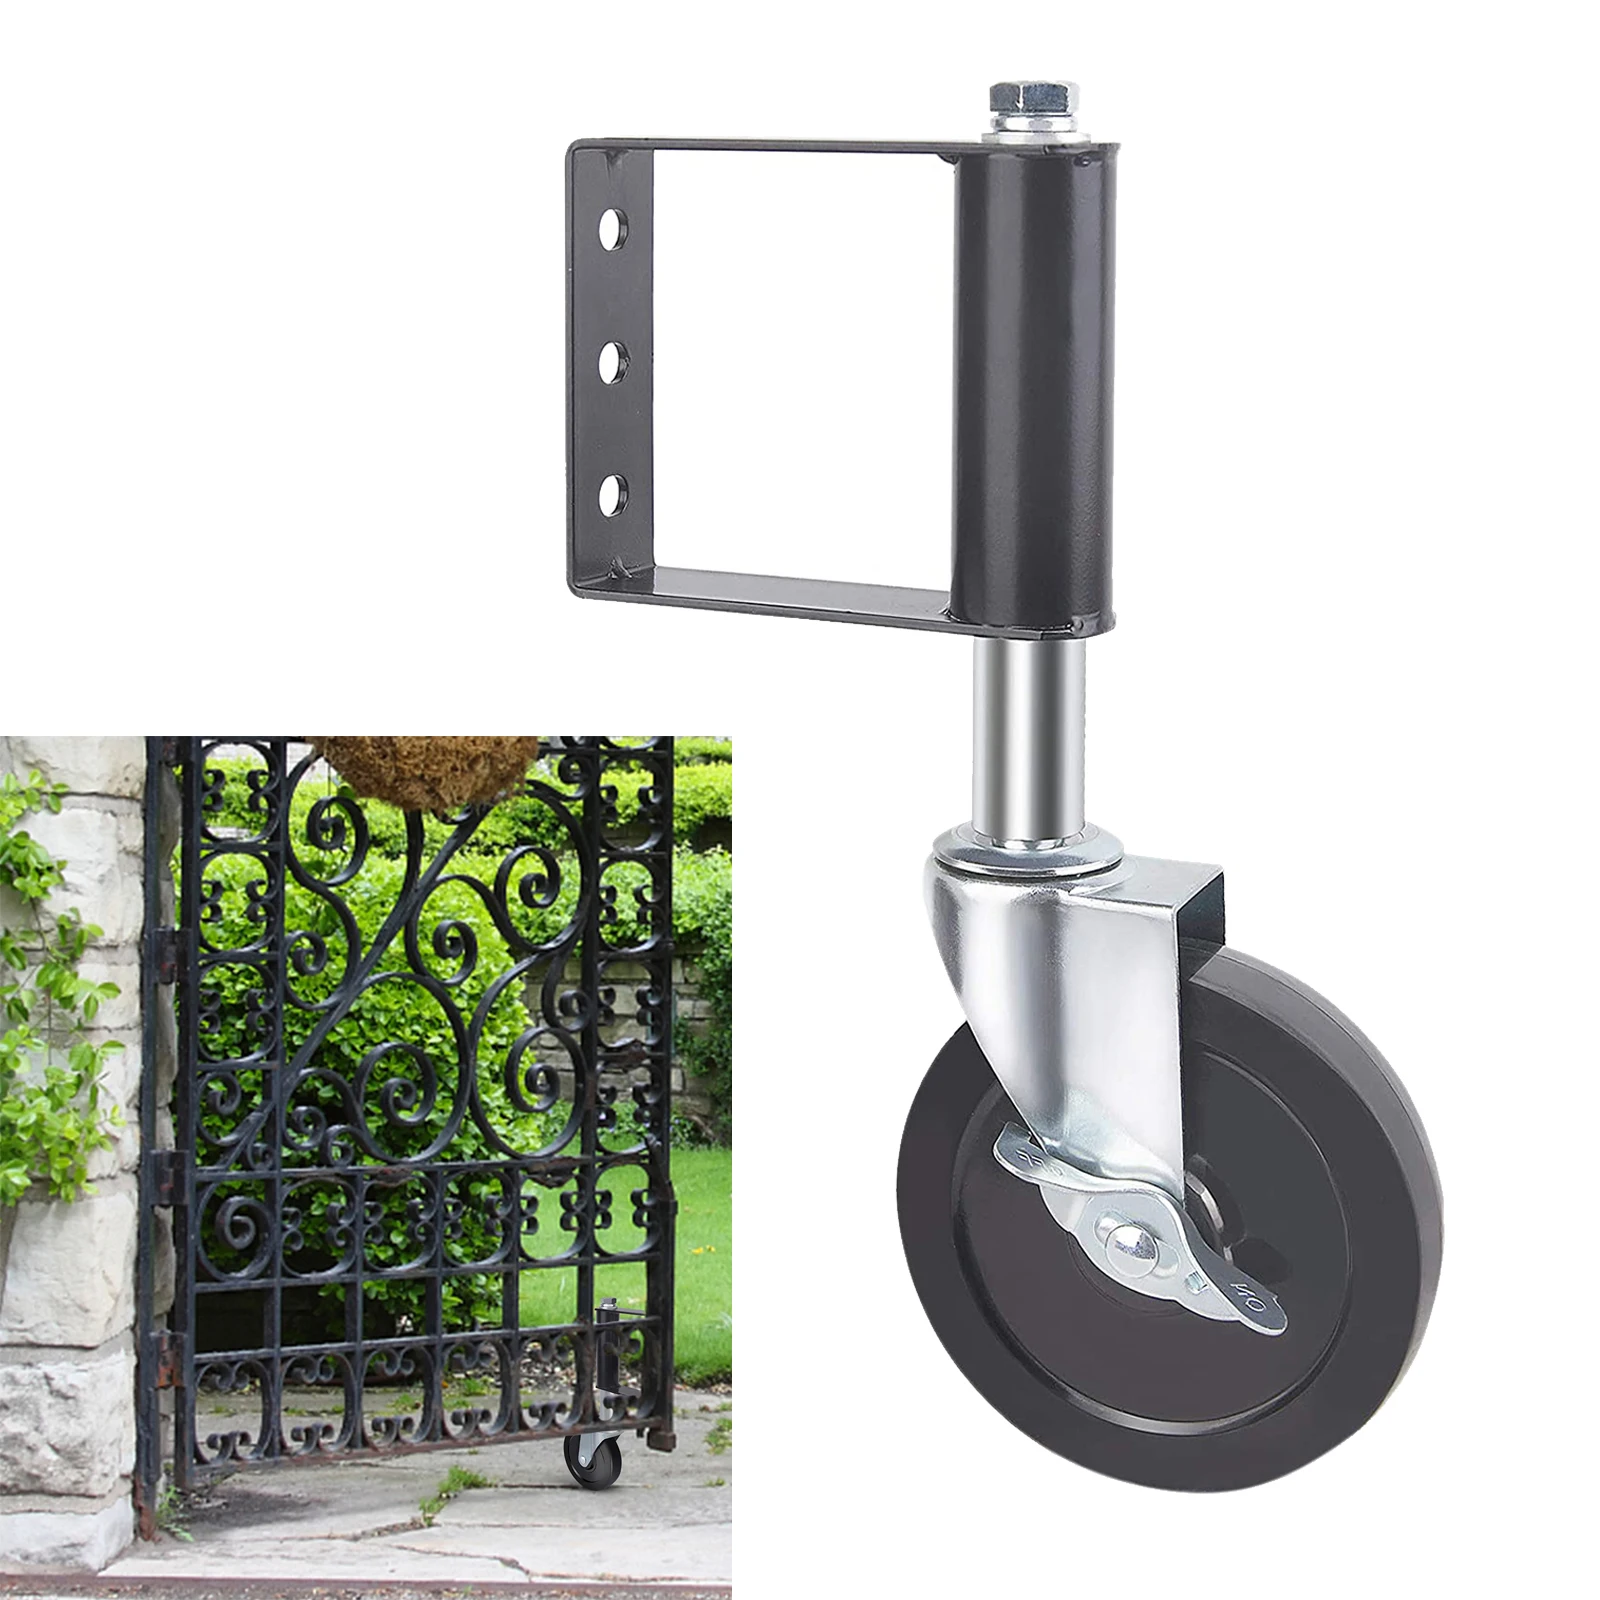 Spring-Loaded Swivel Door Gate Wheel Caster Ageing Resistance Black Tool